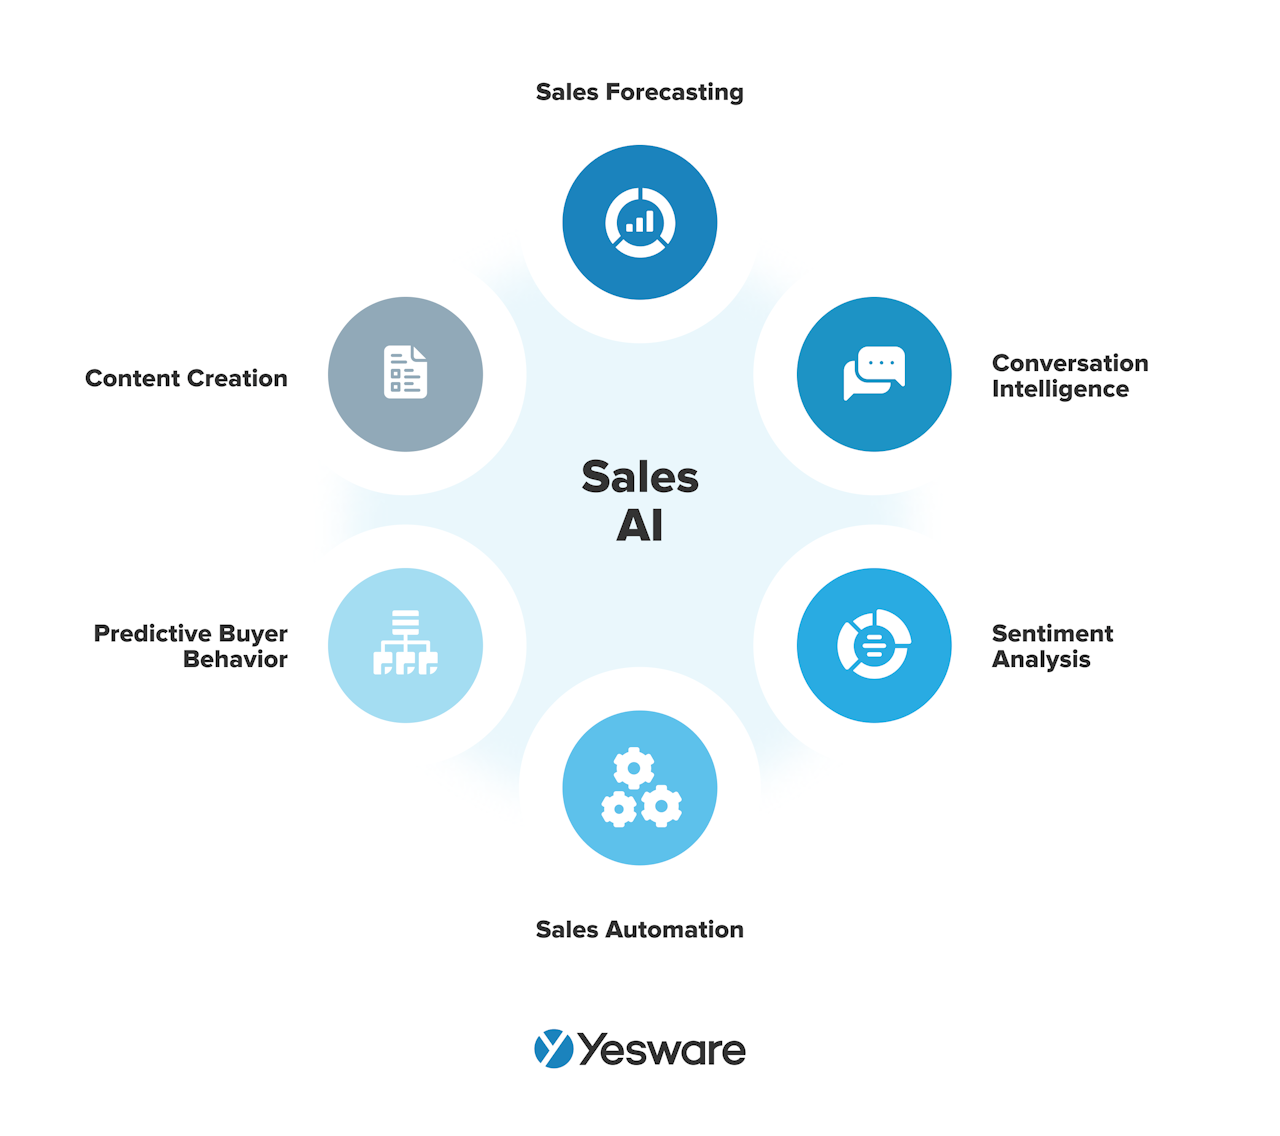 b2b sales tools: artificial intelligence (AI)